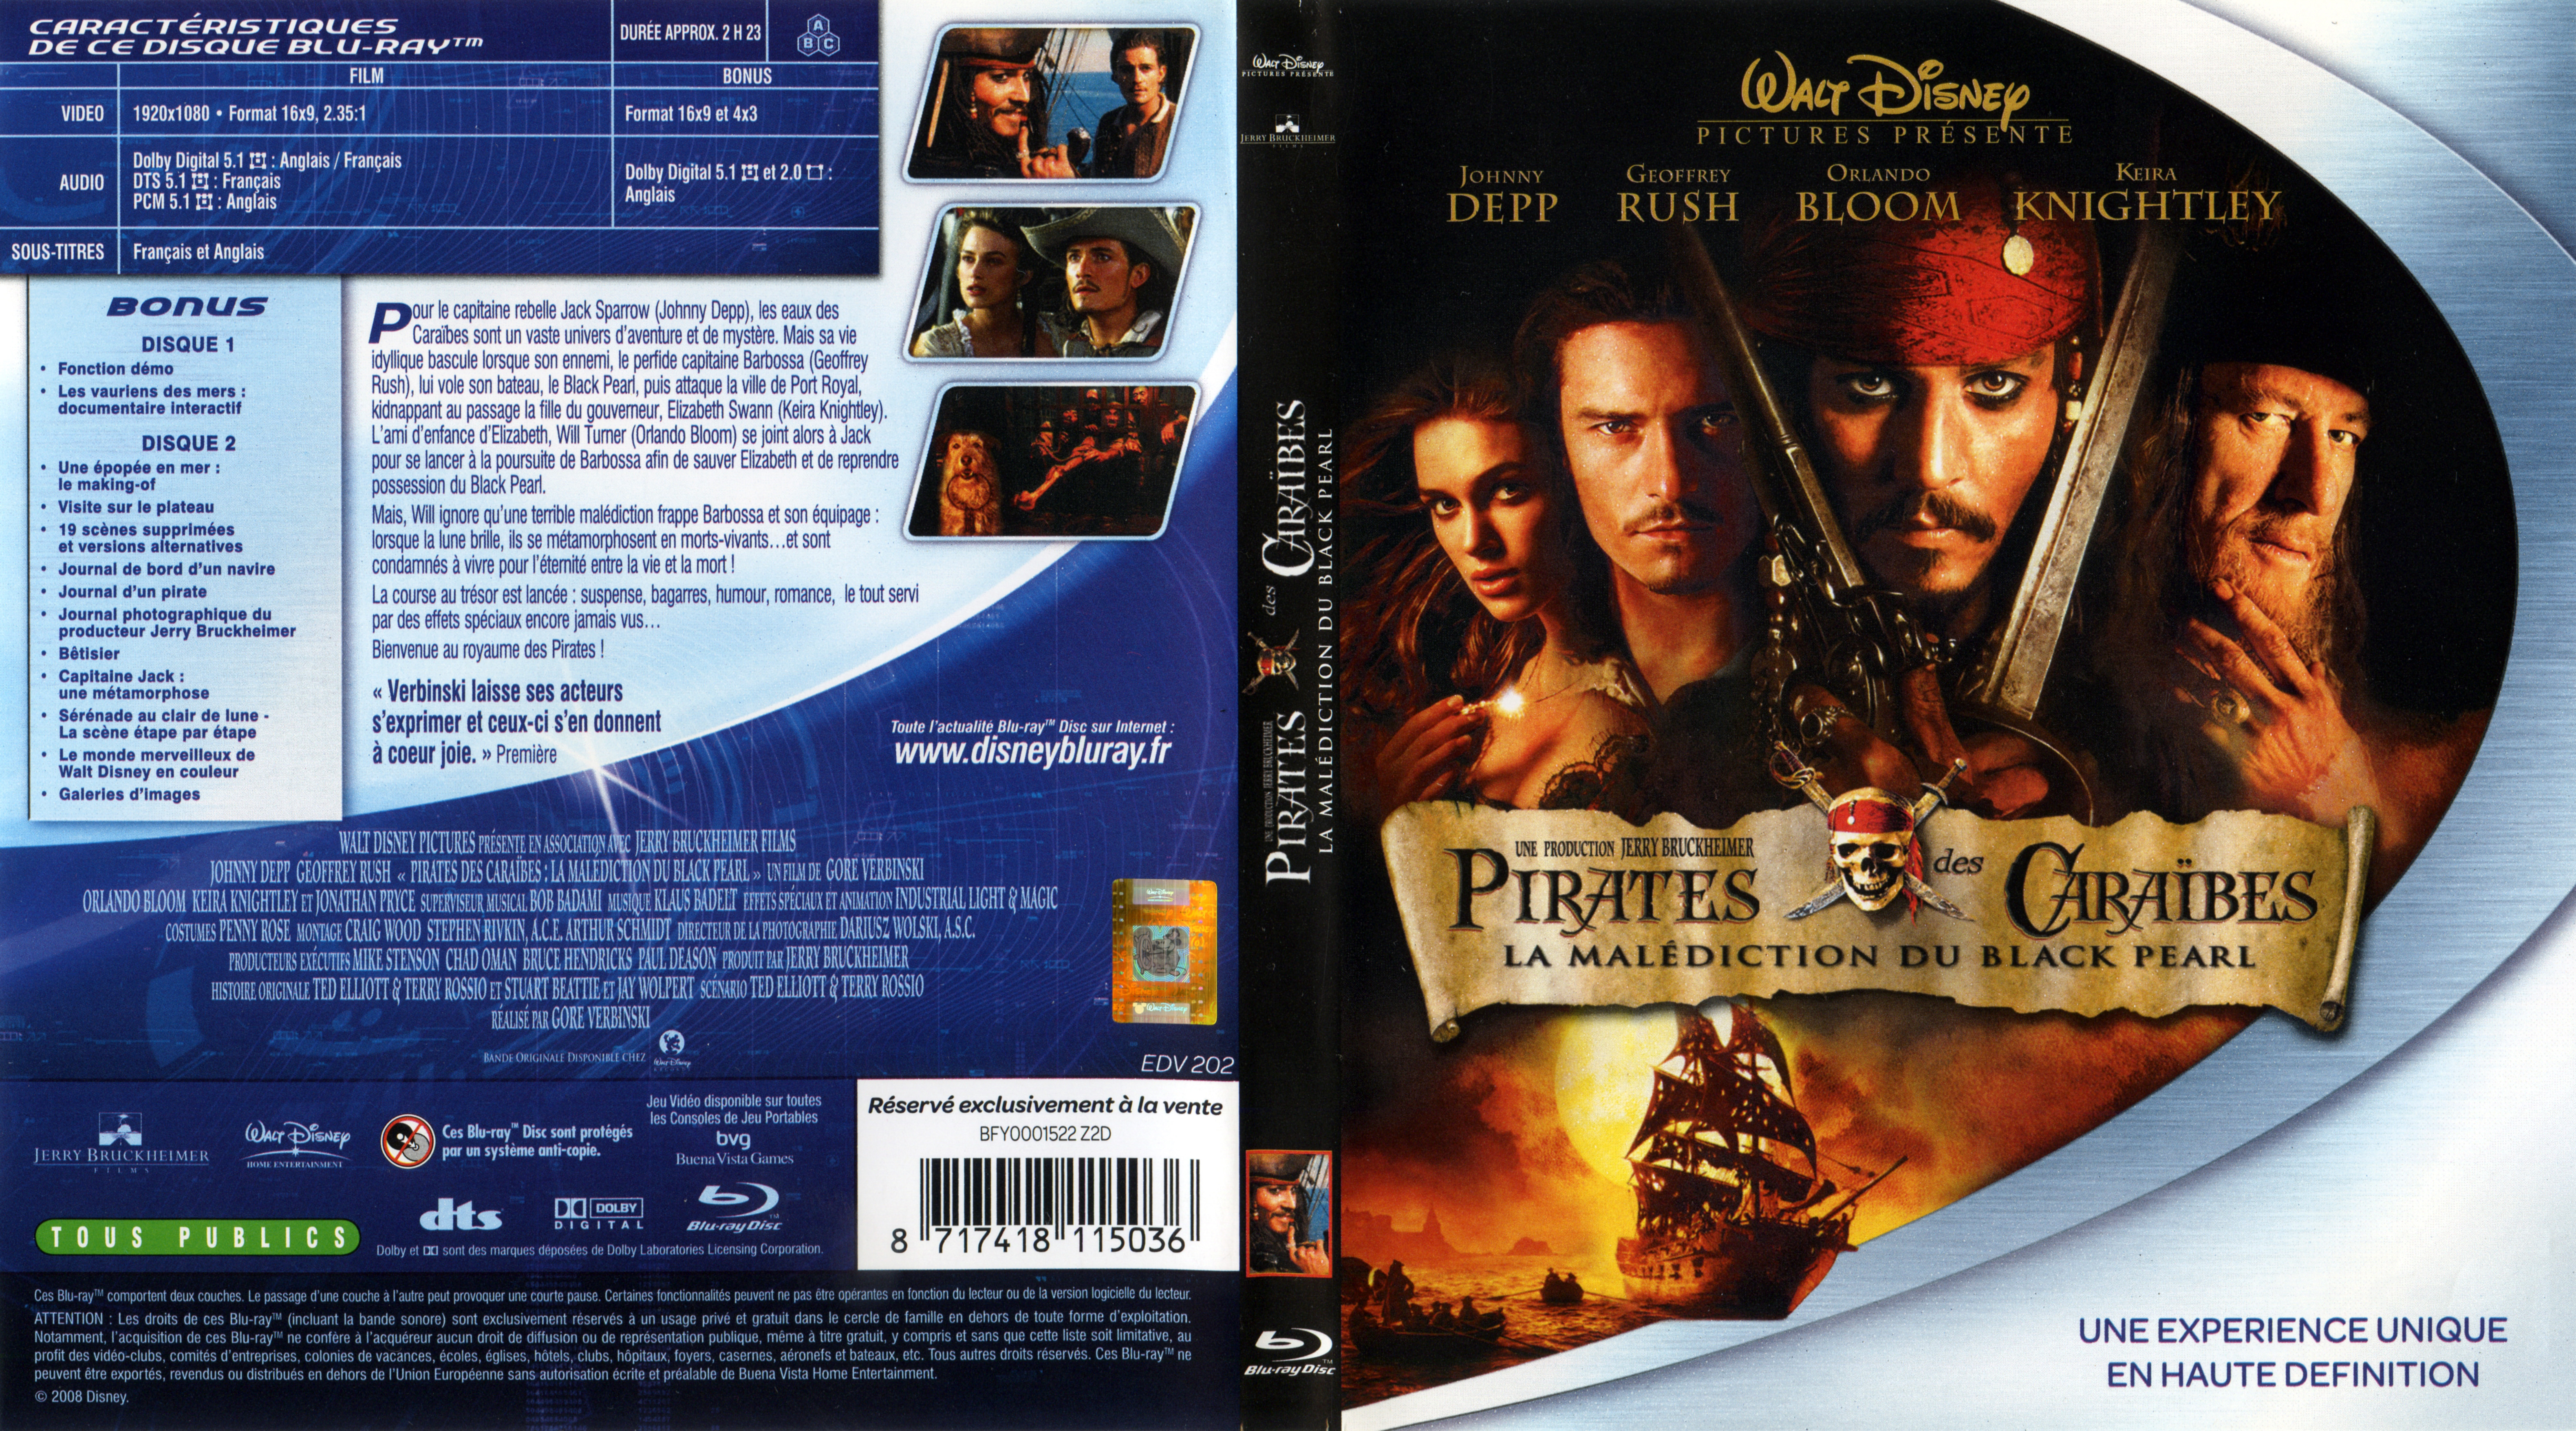 Jaquette DVD Pirates des Caraibes (BLU-RAY) v2